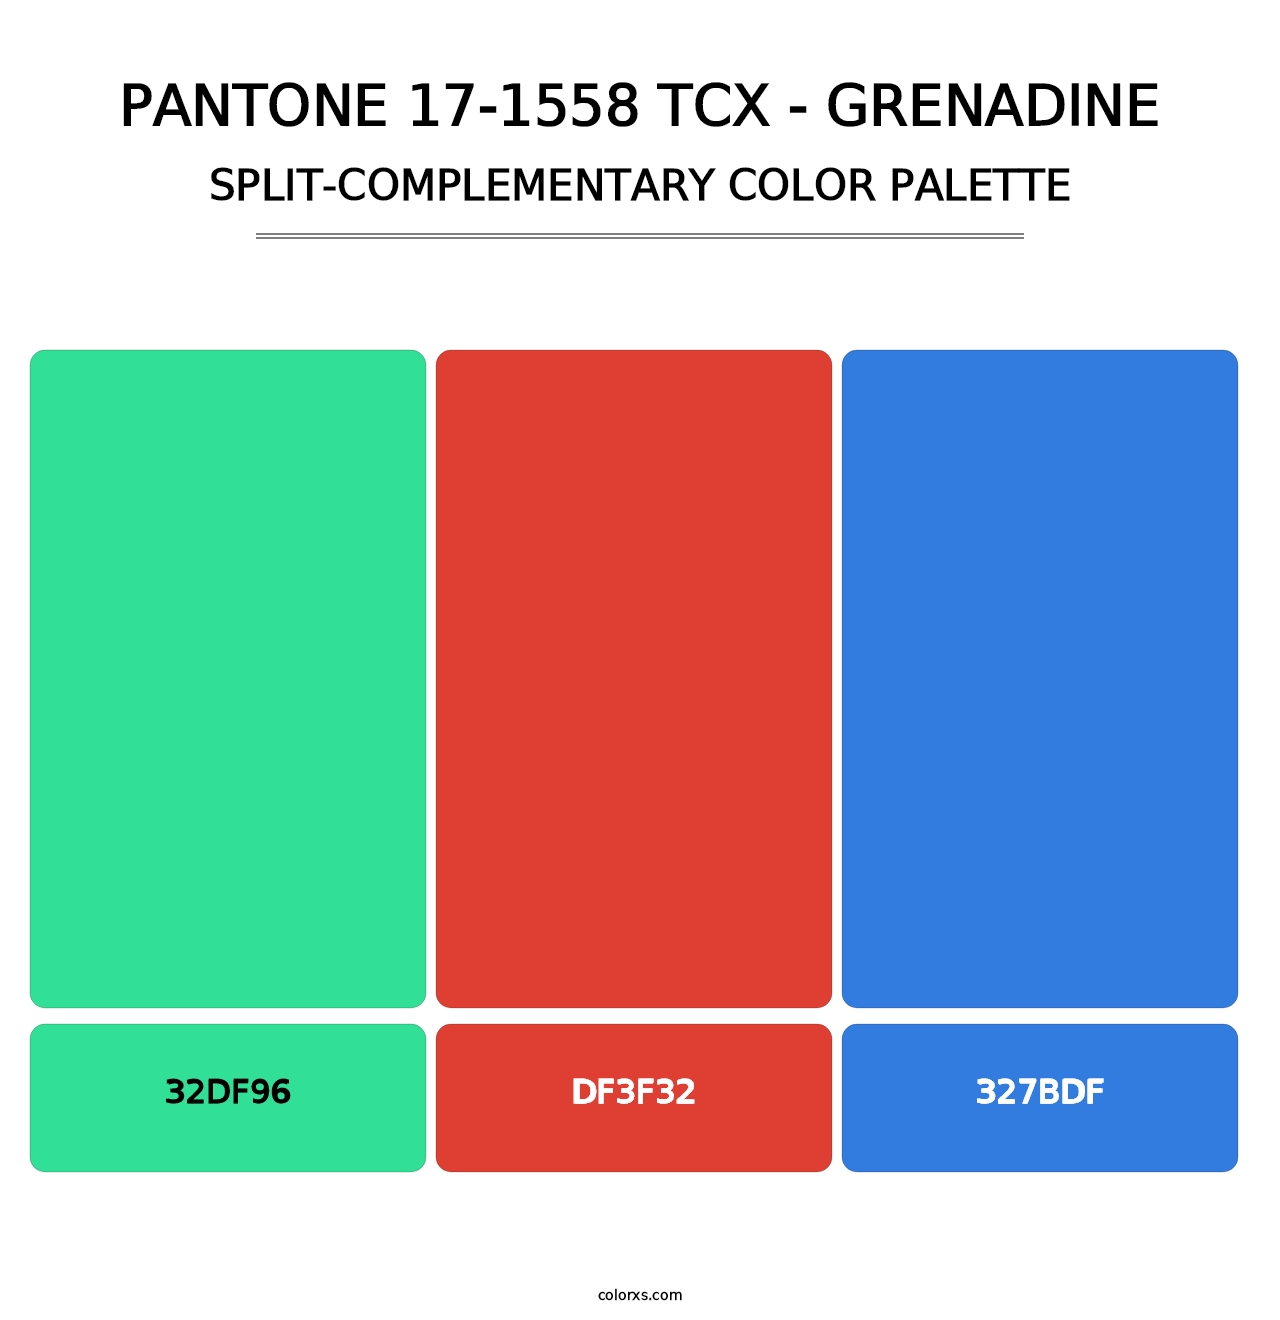 PANTONE 17-1558 TCX - Grenadine - Split-Complementary Color Palette